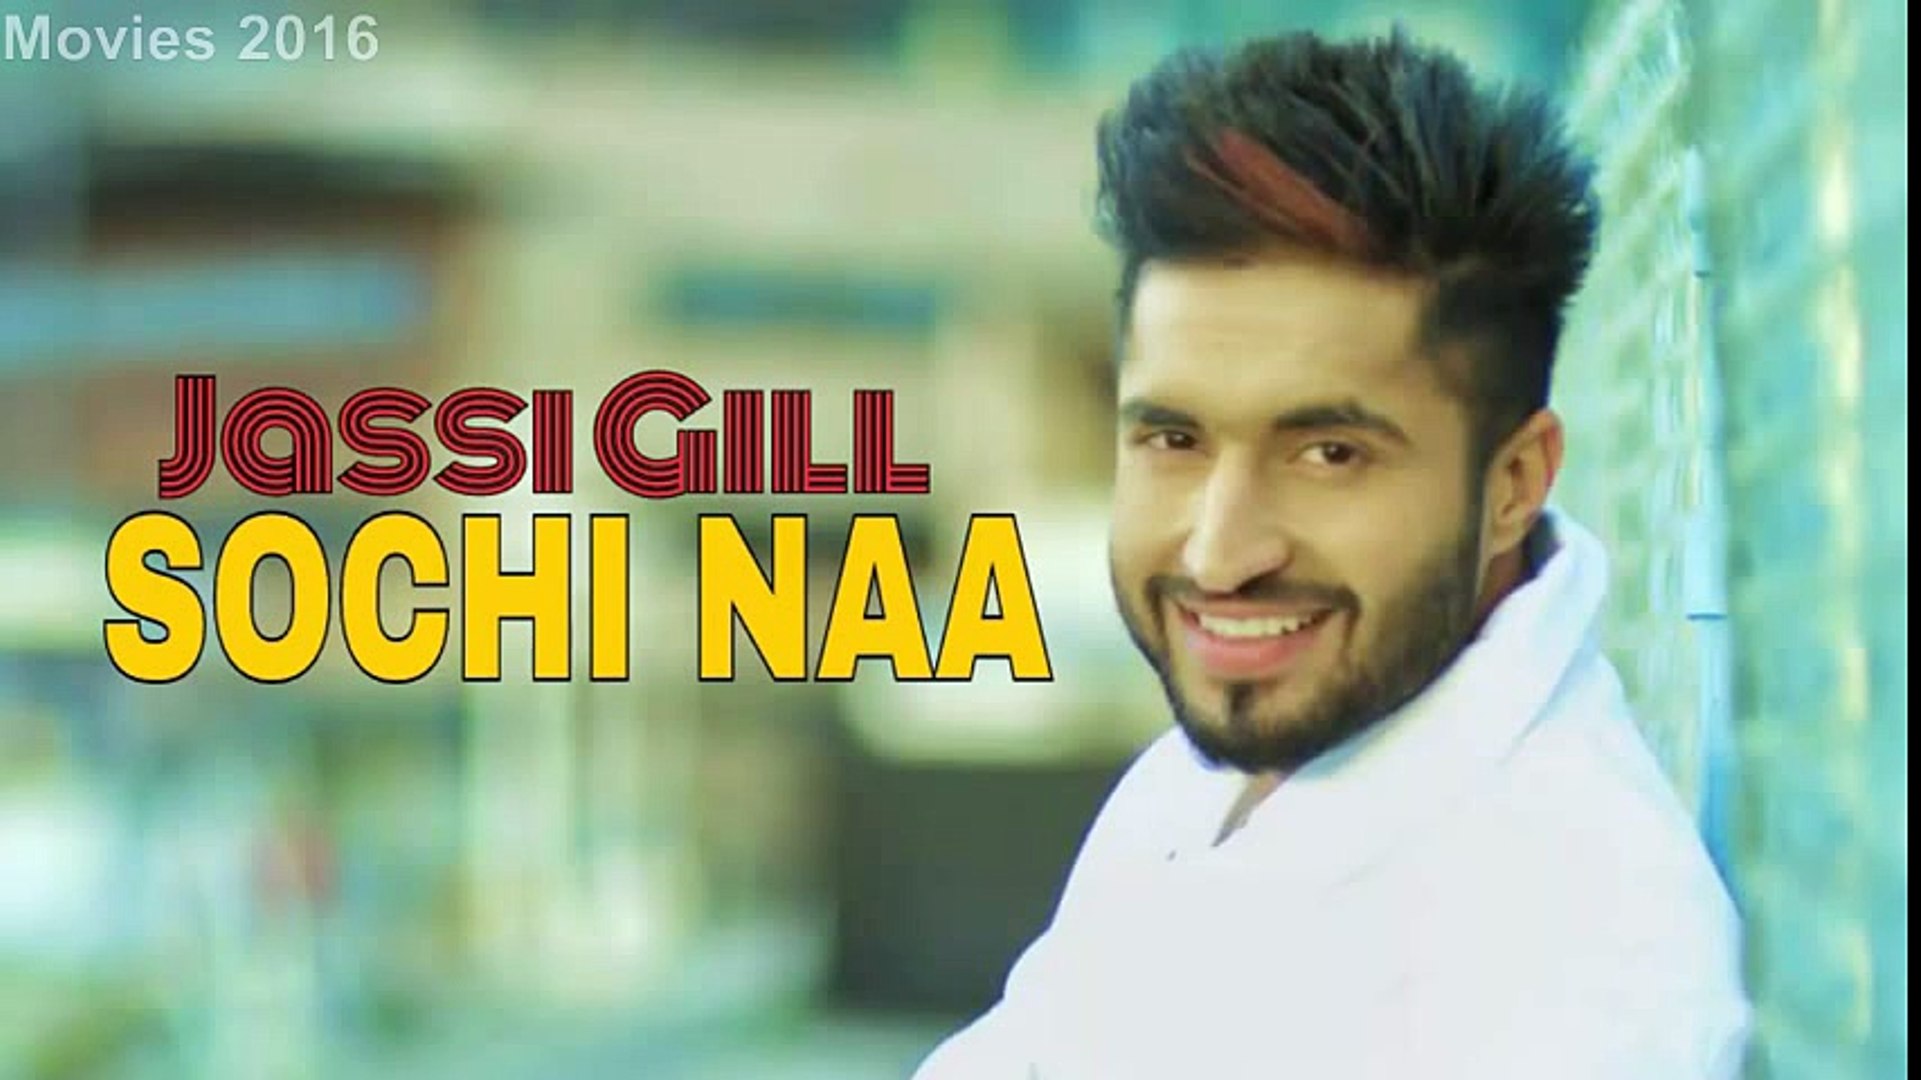 Sochi Naa [Full Video HD] - Jassi Gill - Nation Brothers - Brand New  Punjabi Songs 2016 - video Dailymotion